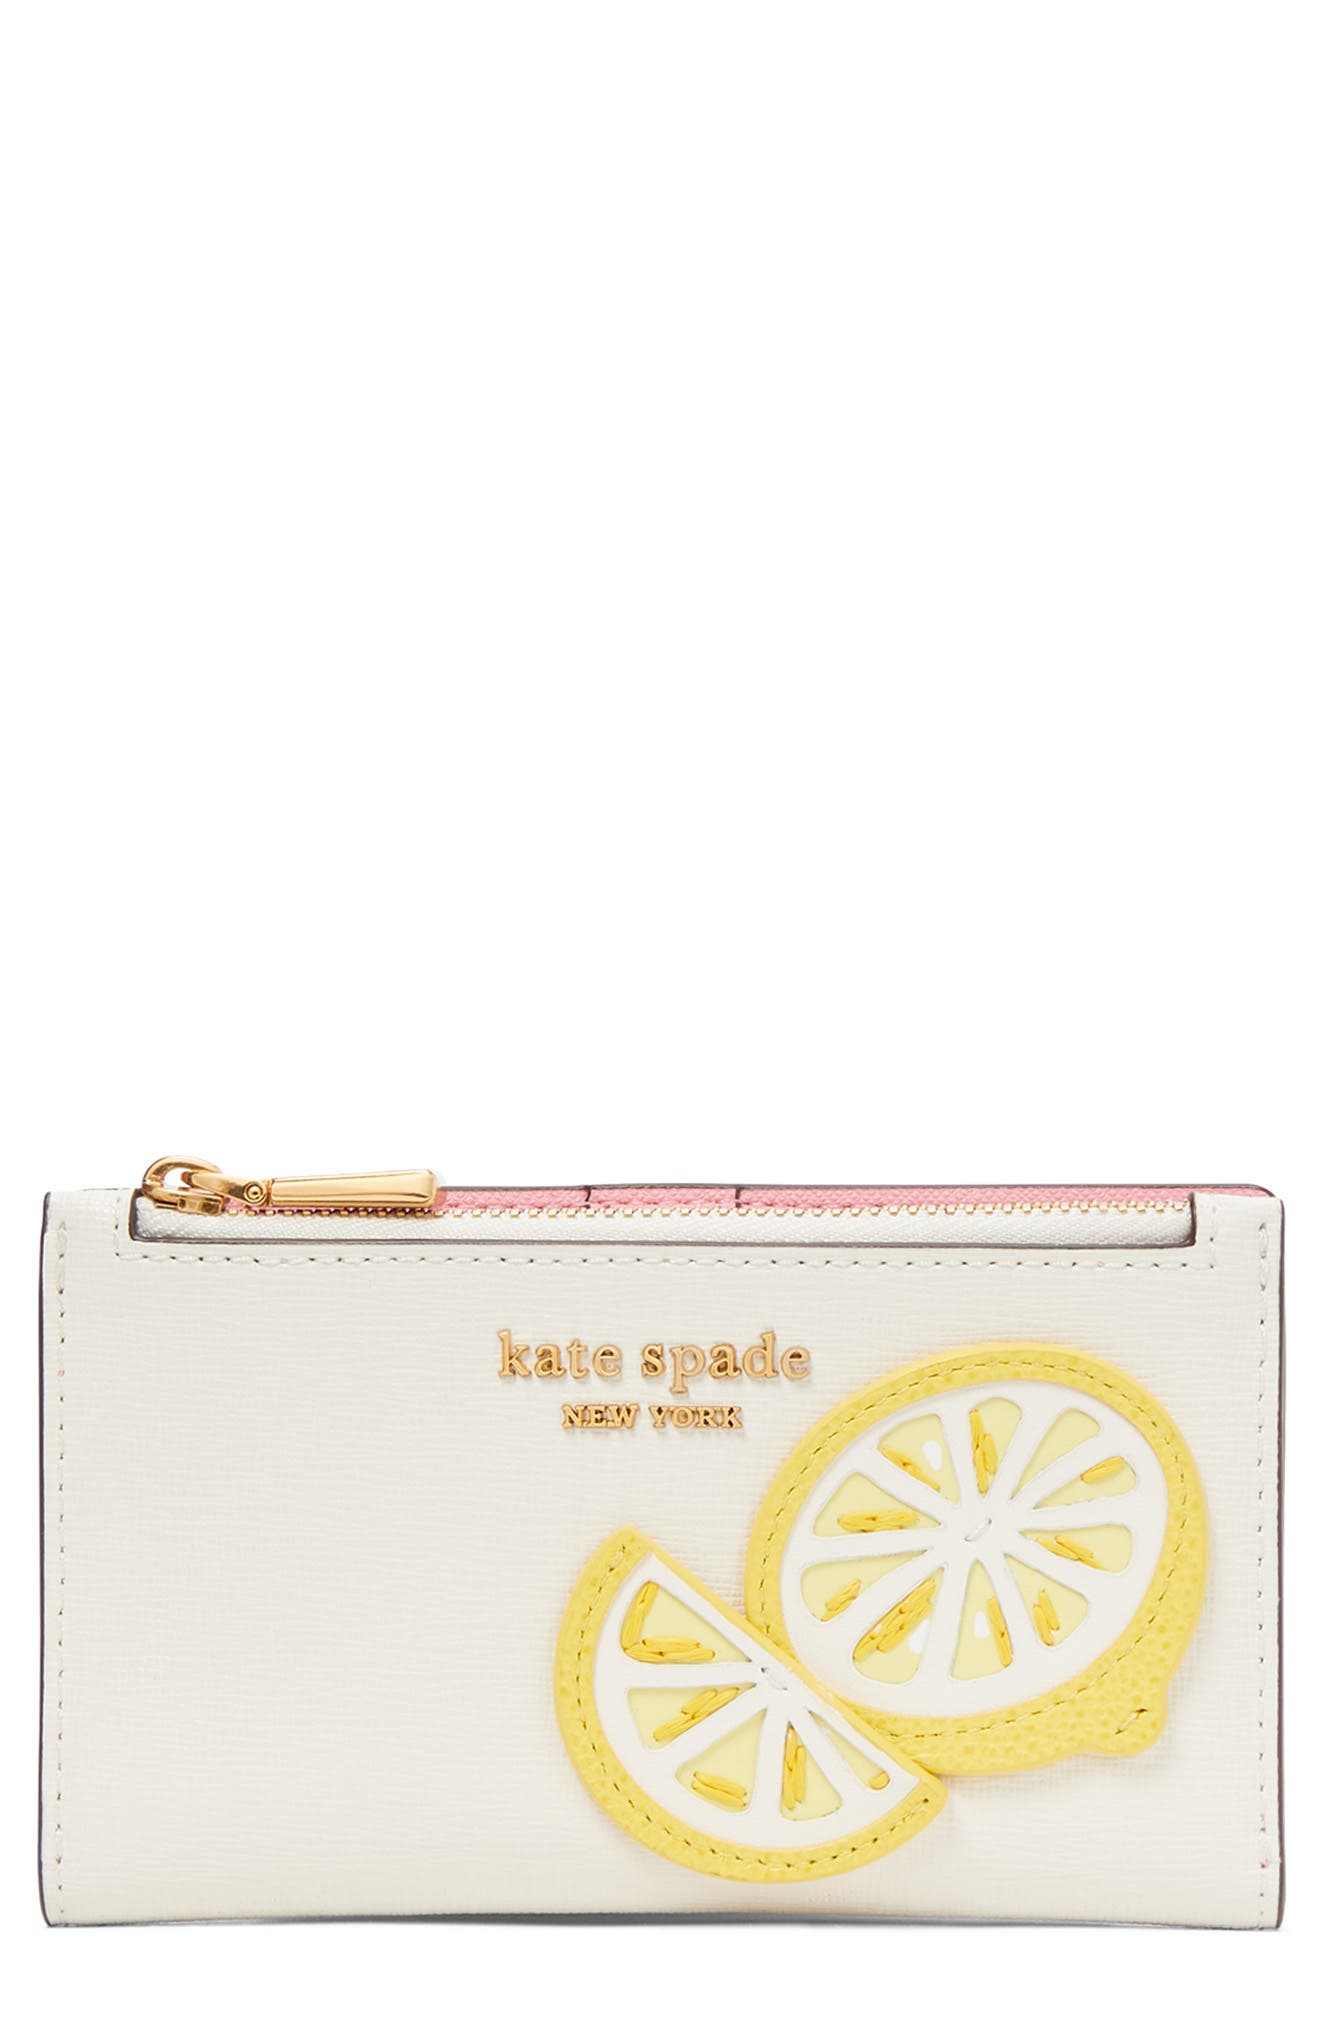 Kate spade new york Morgan Lemon Zip Around Continental Wallet